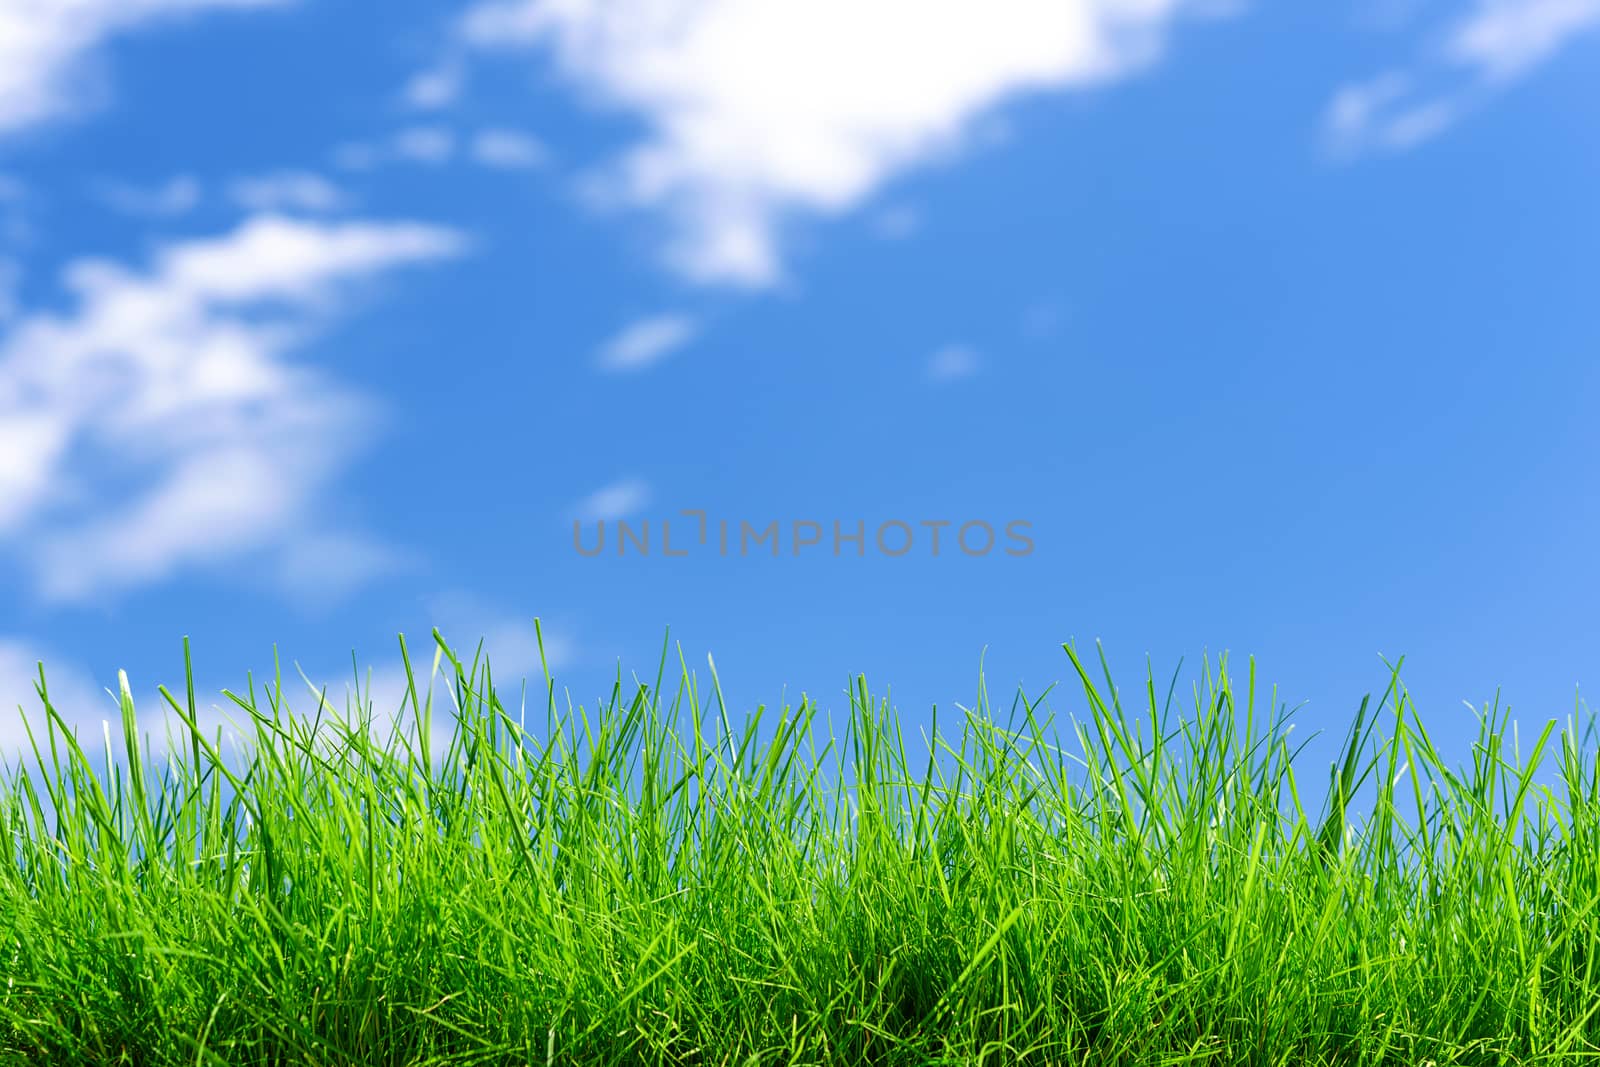 Idyllic nature landscape - field of fresh green grass on a blue sky background ( copy space)